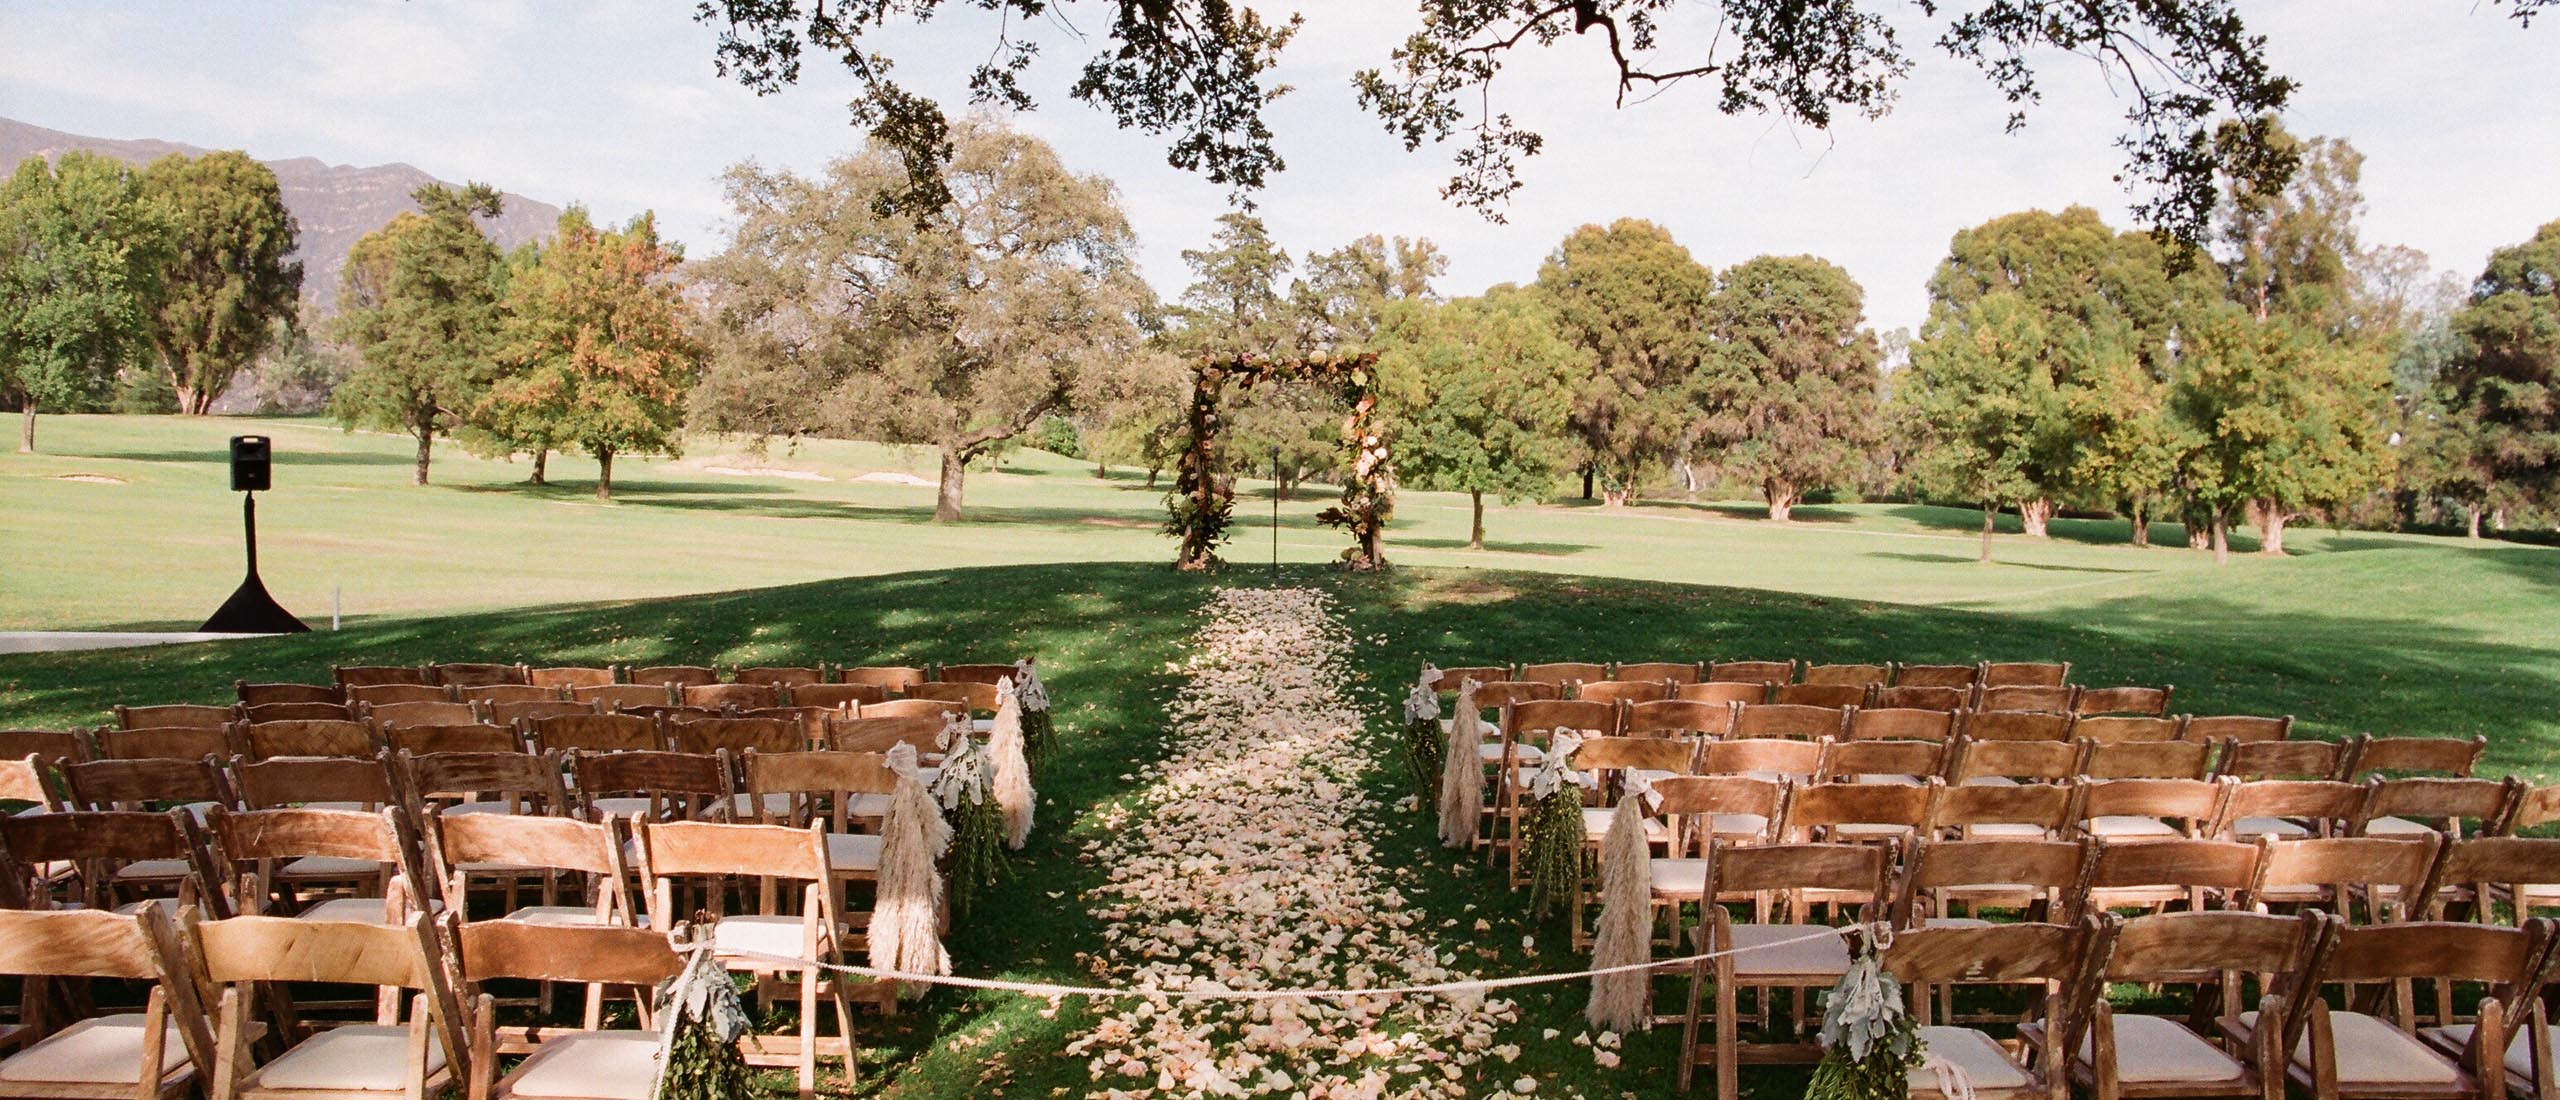 Southern California Wedding Venues | Ojai Valley Inn - Weddings | Ojai